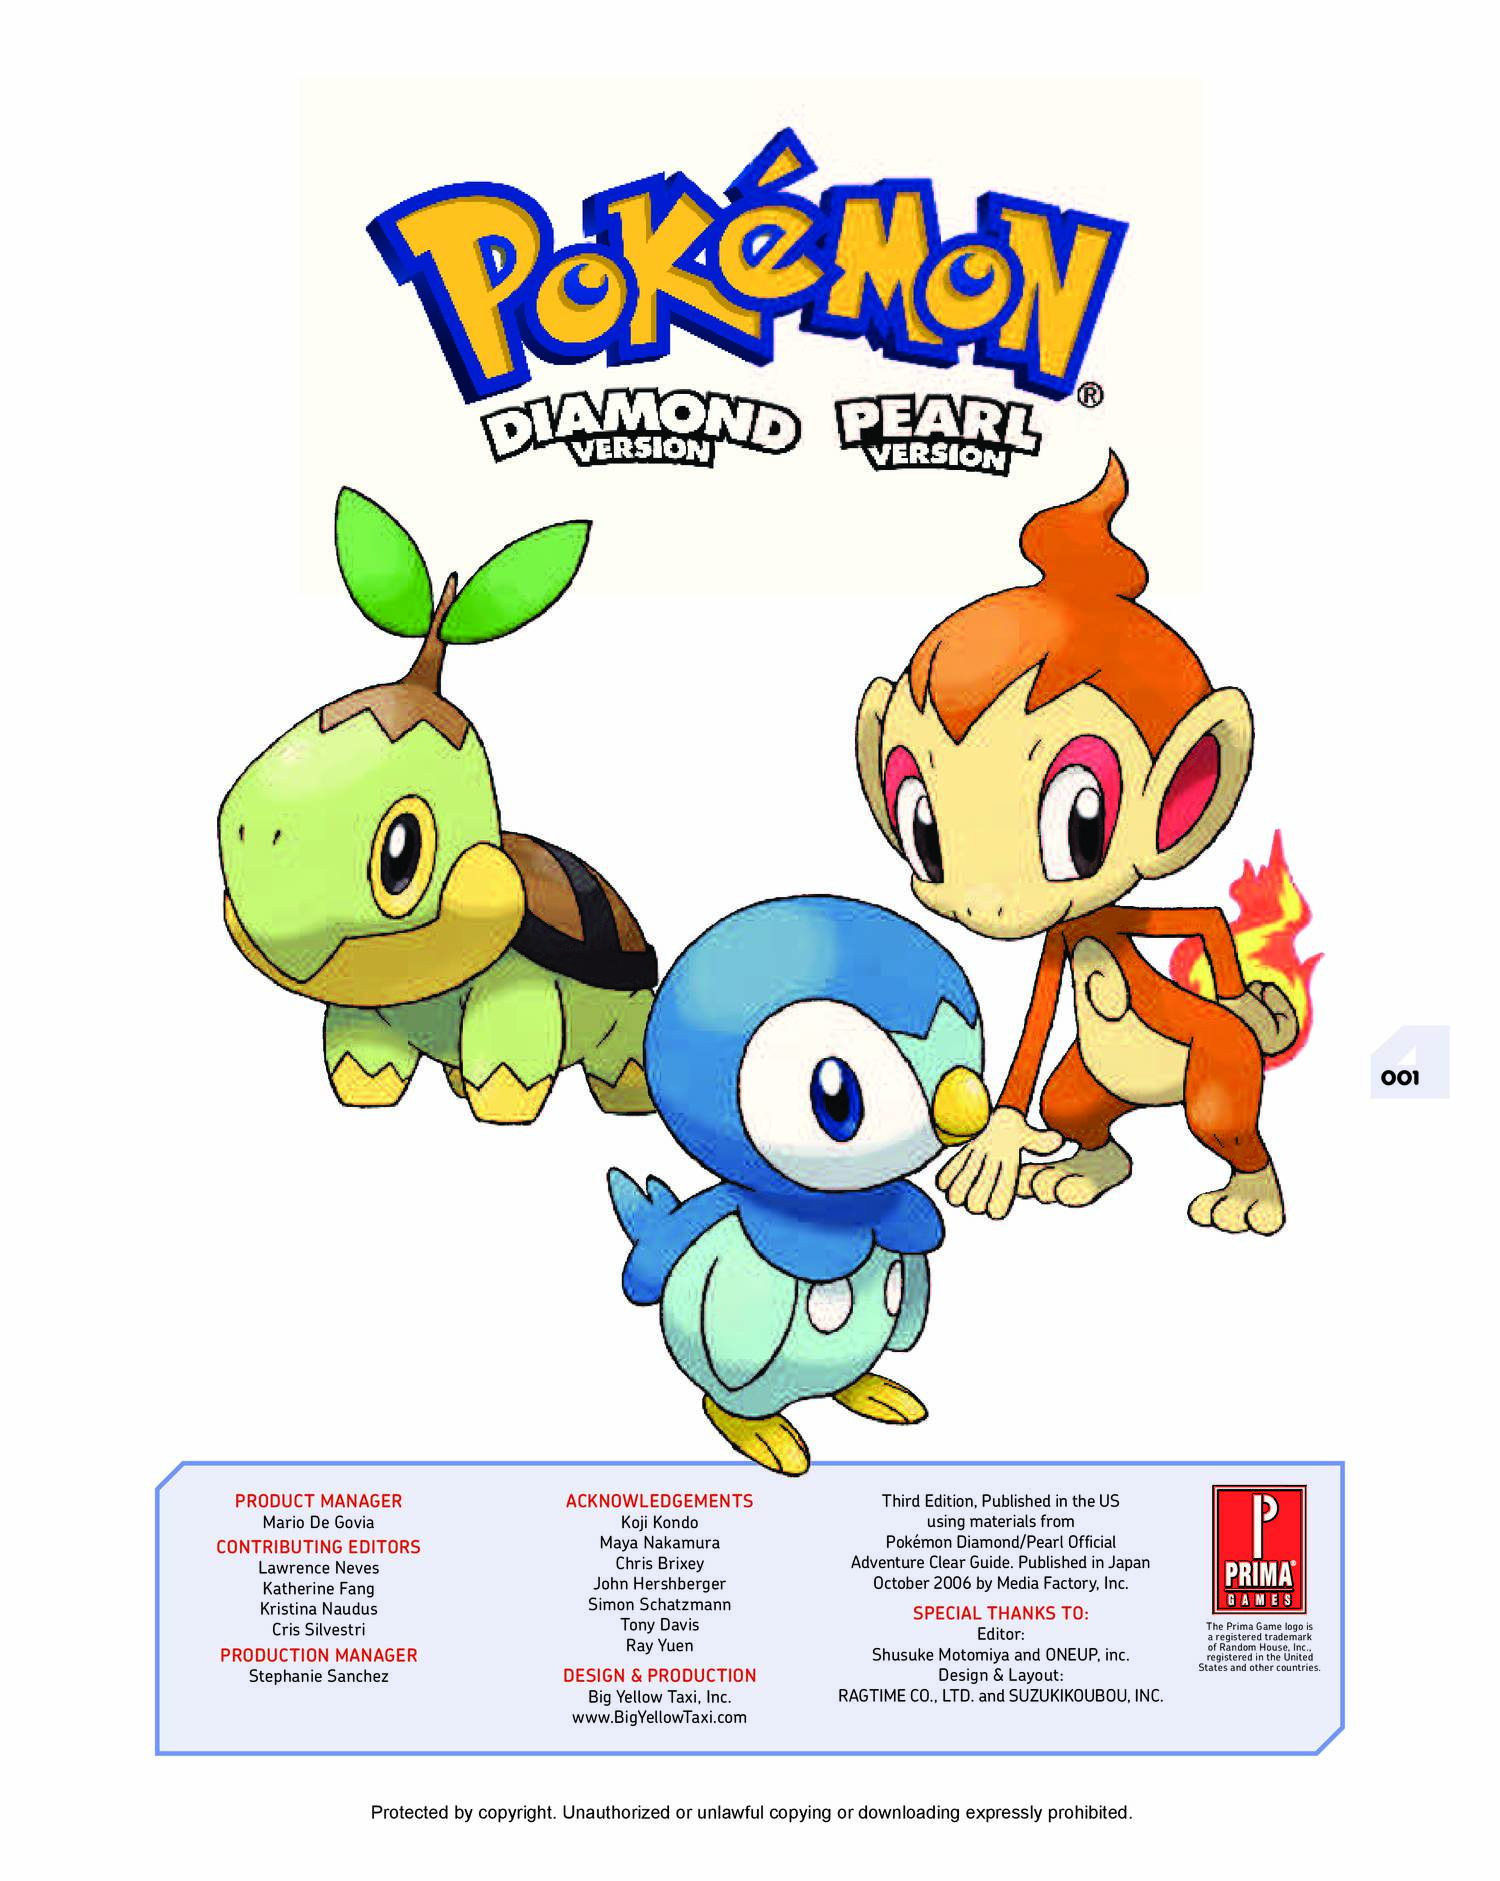 Prima 1999) - Pokemon Red & Blue.pdf